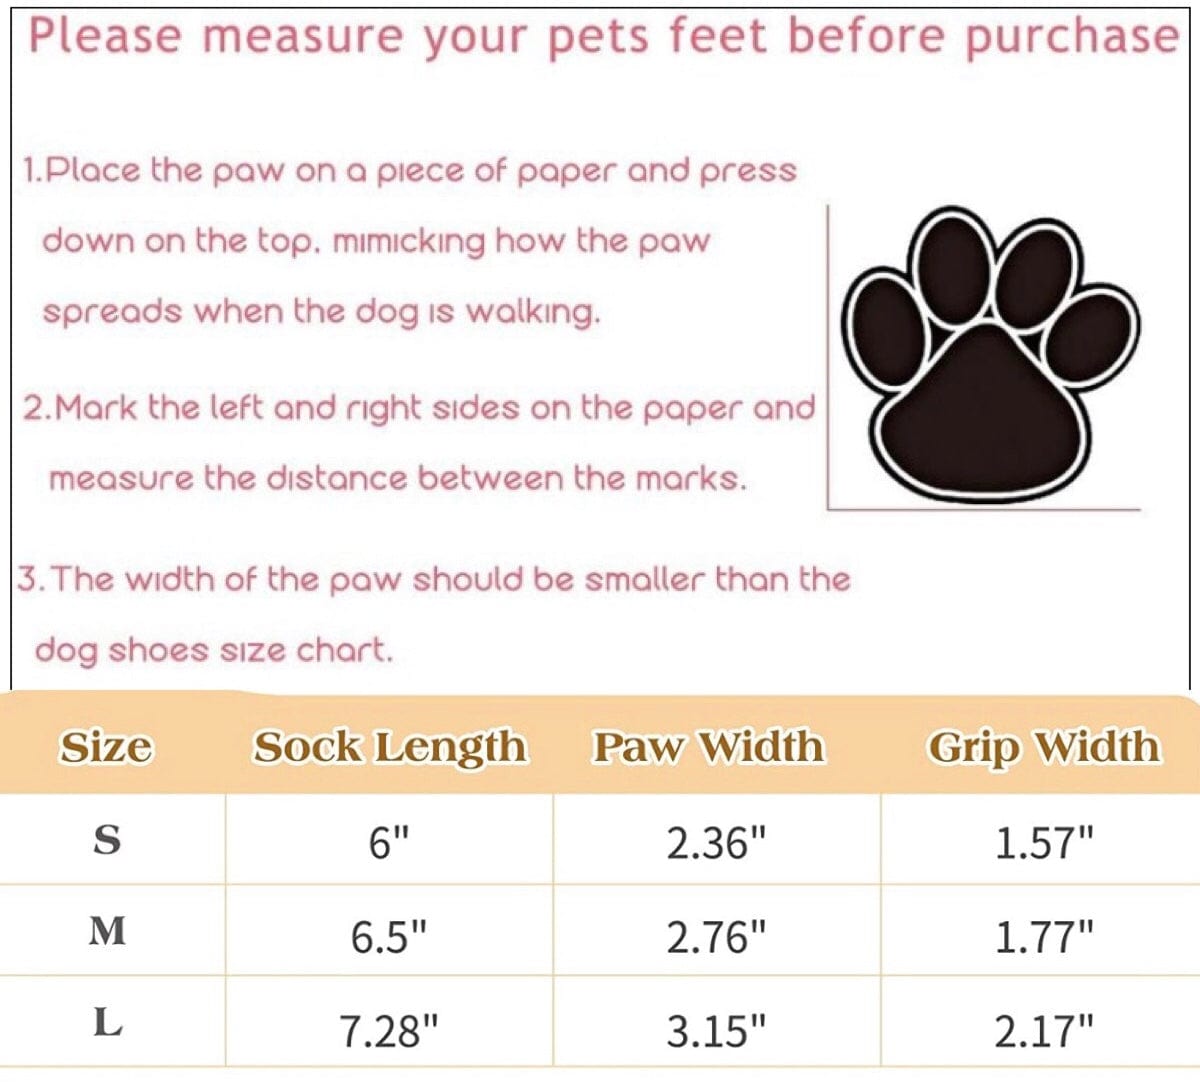 Anti Slip Dog Socks - Dog Grip Socks With Straps Traction Control